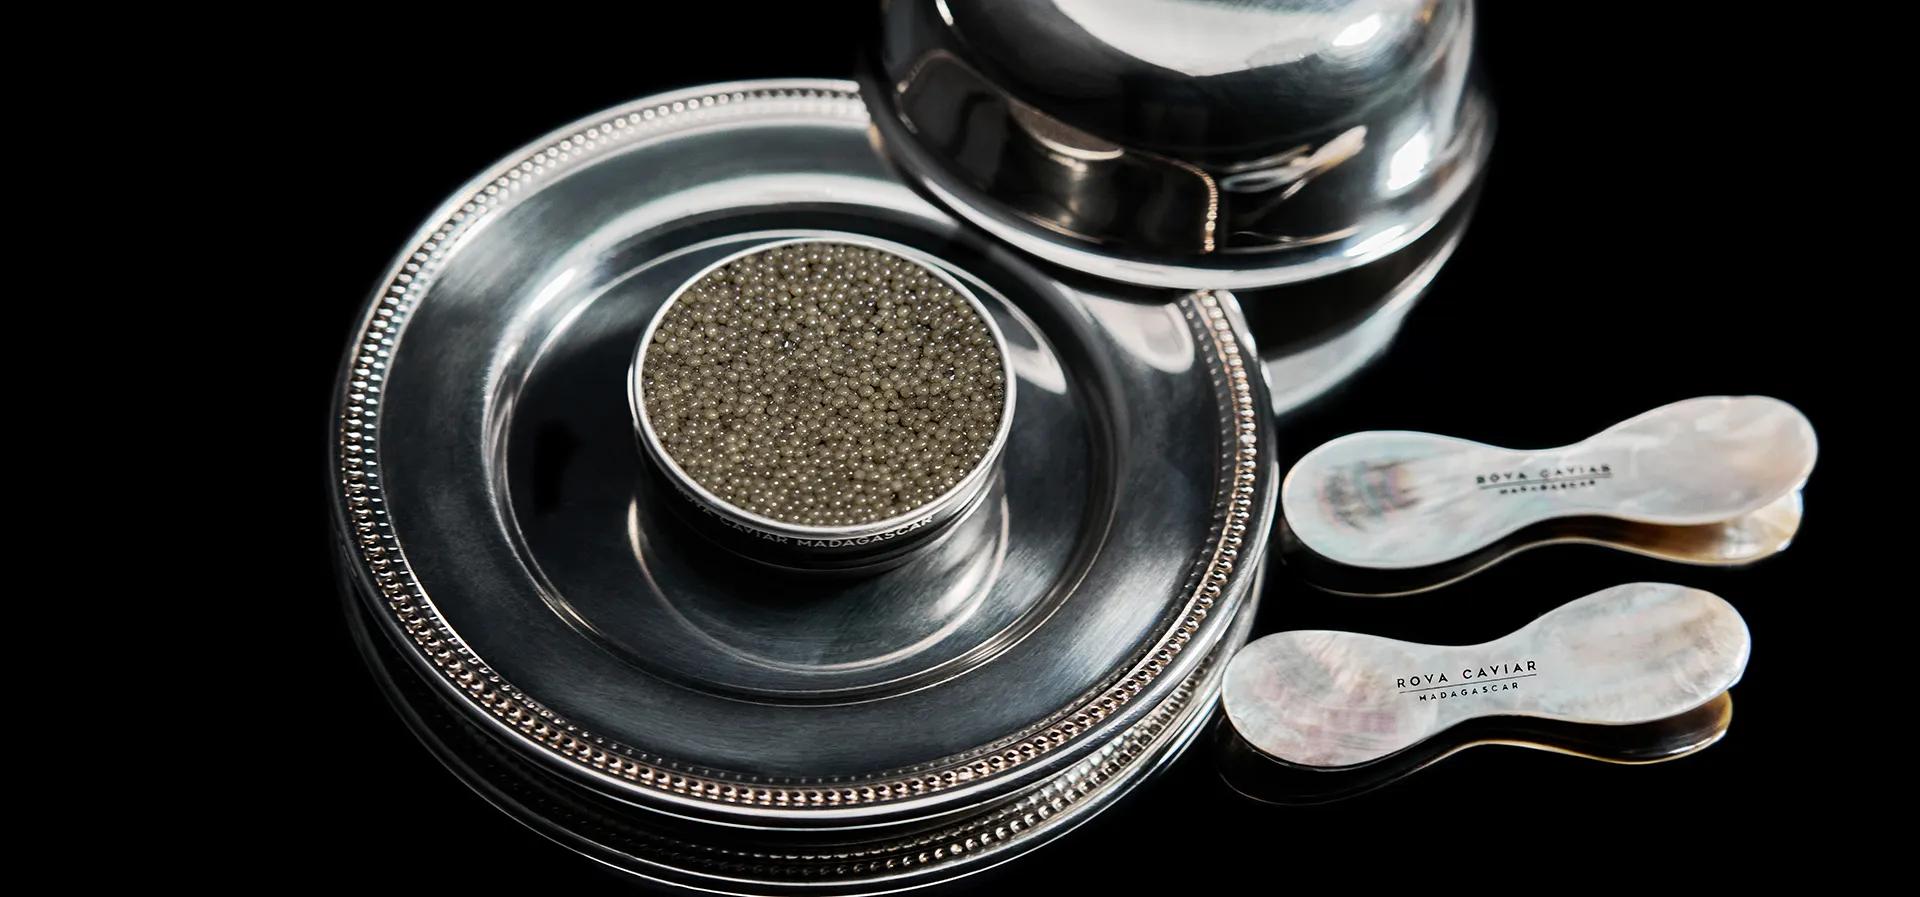 Silverware service and Shipova Royal caviar box